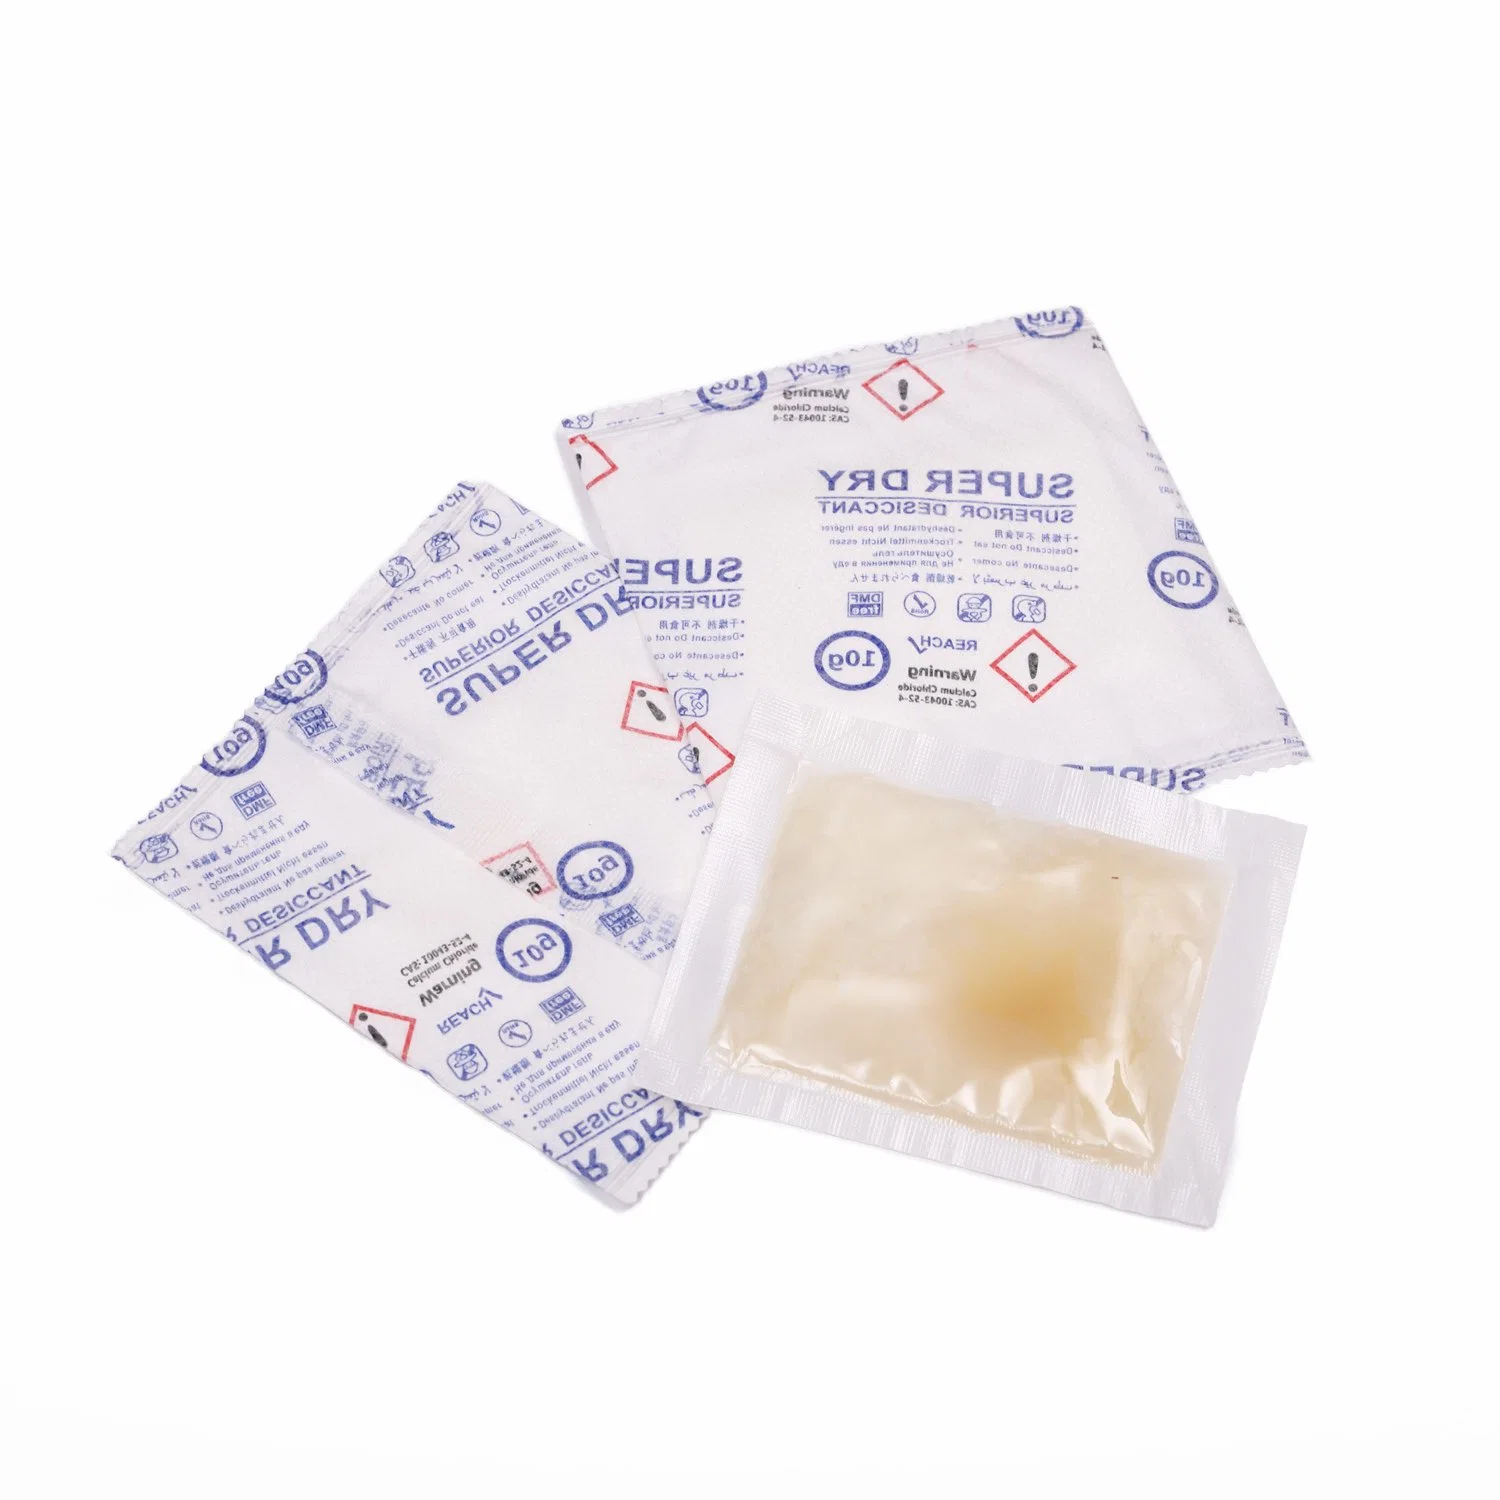 Super Dry Calcium Chloride Descicant Mold Prevention for Garments Packing (Предотвращение 2g-100г